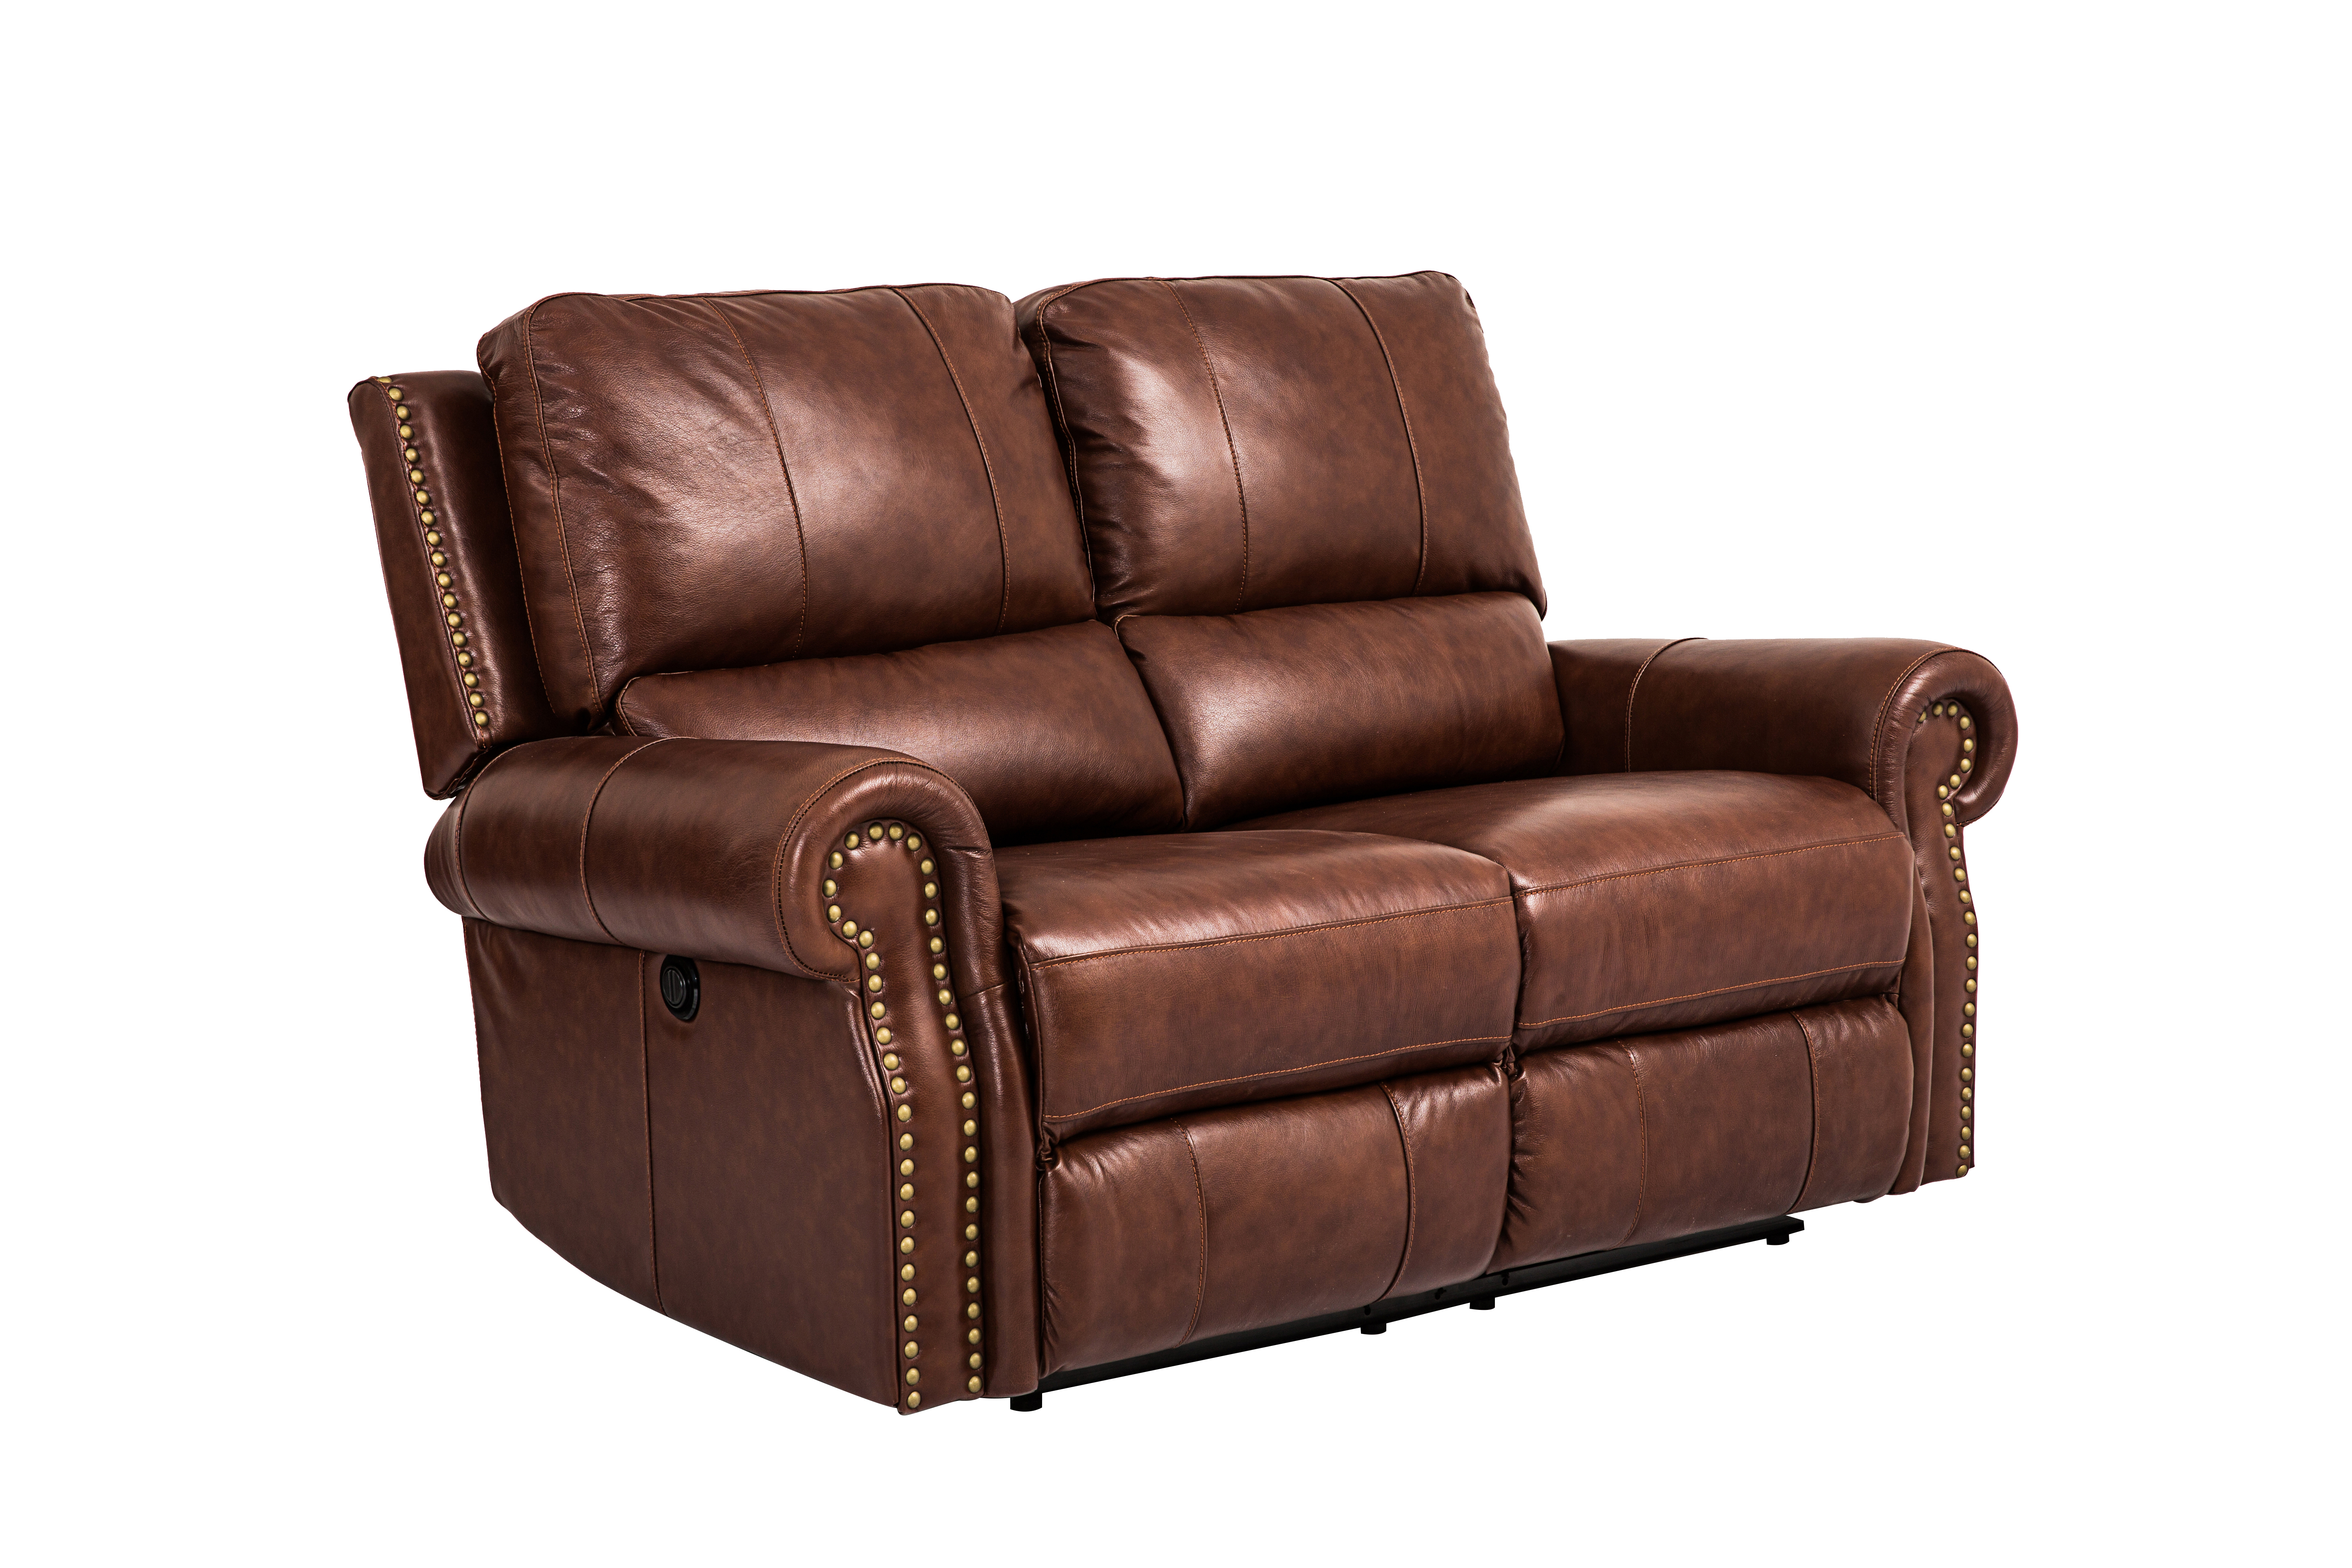 manwah leather power reclining sofa costco